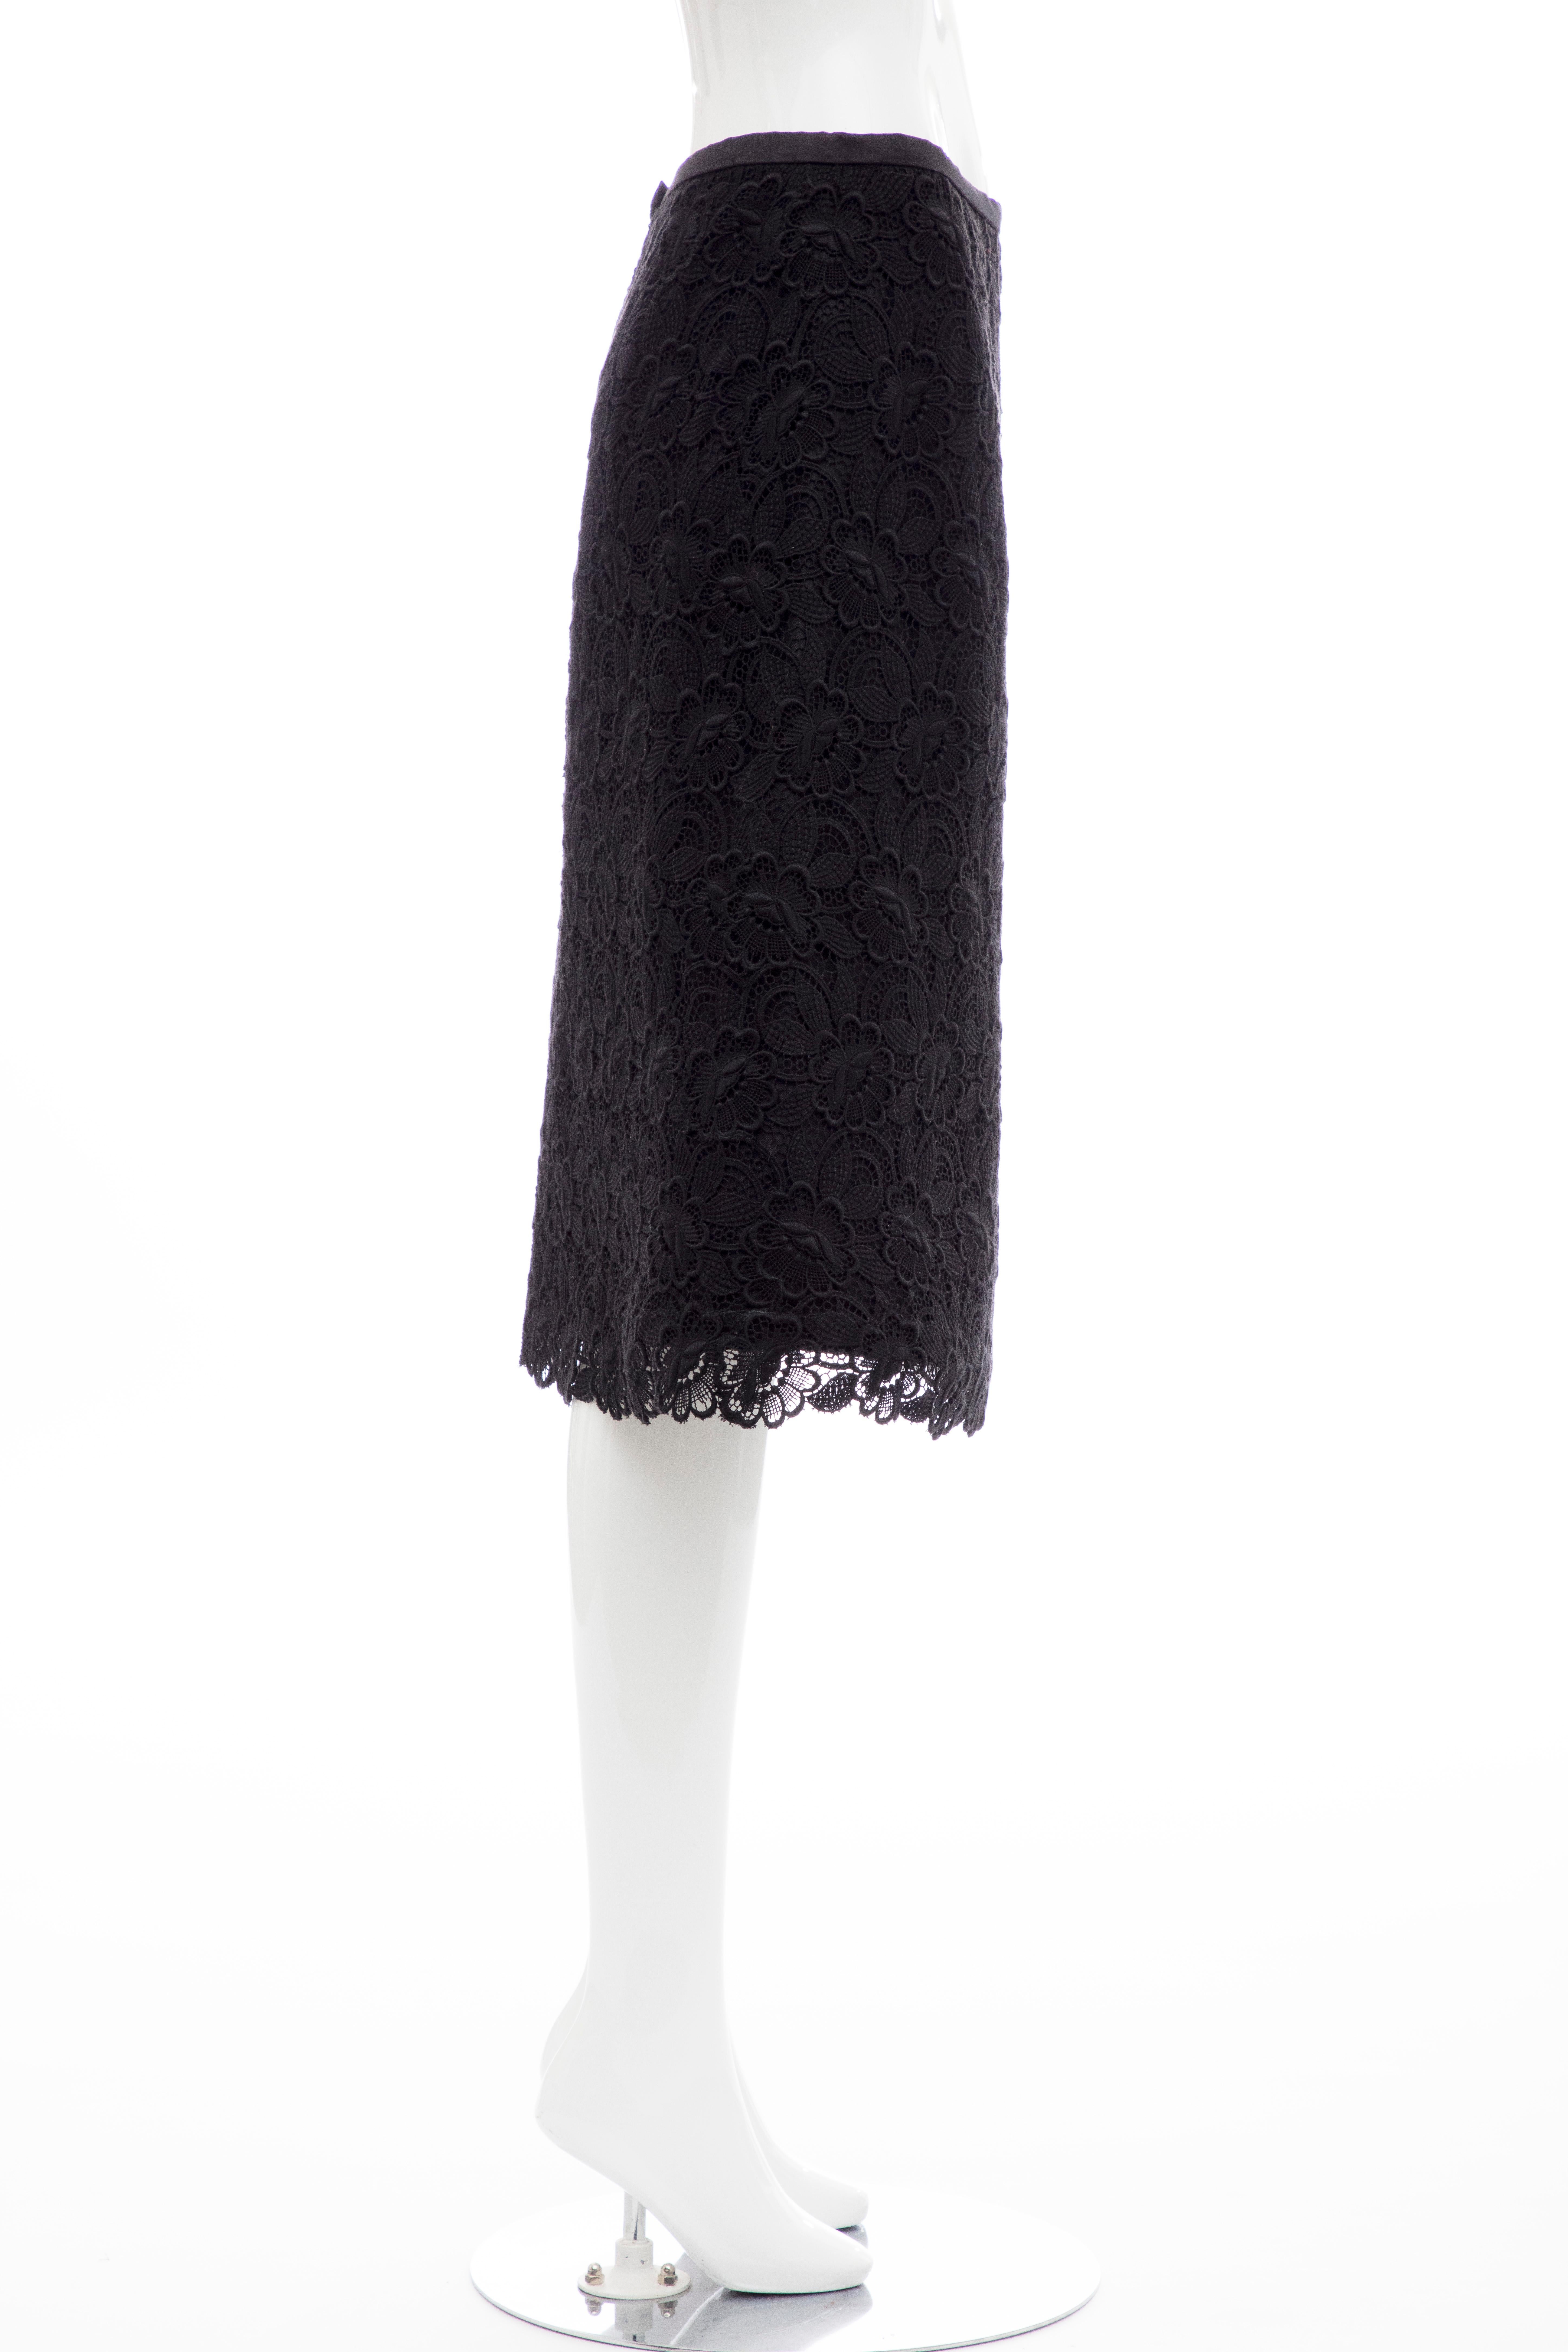 Alexander McQueen Black Silk Cotton Guipure Lace Evening Skirt, Fall 2006 For Sale 4